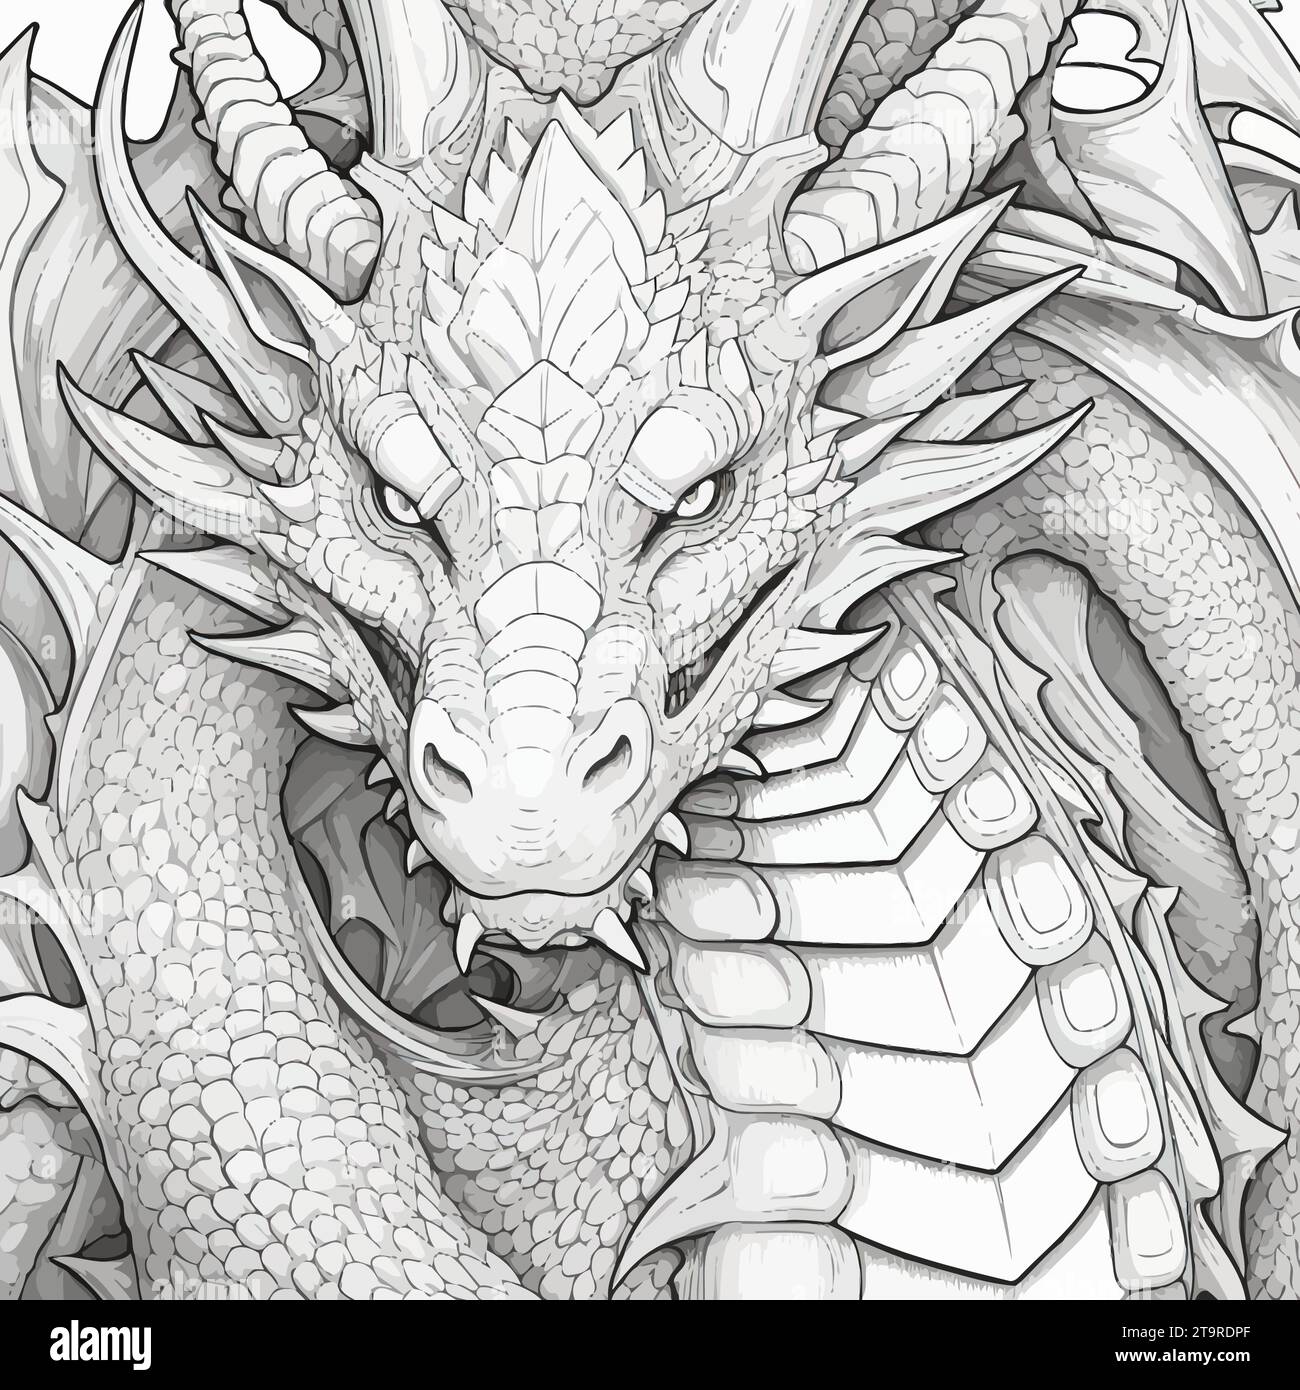 Dragon Coloring Illustration Vector Stock Vector